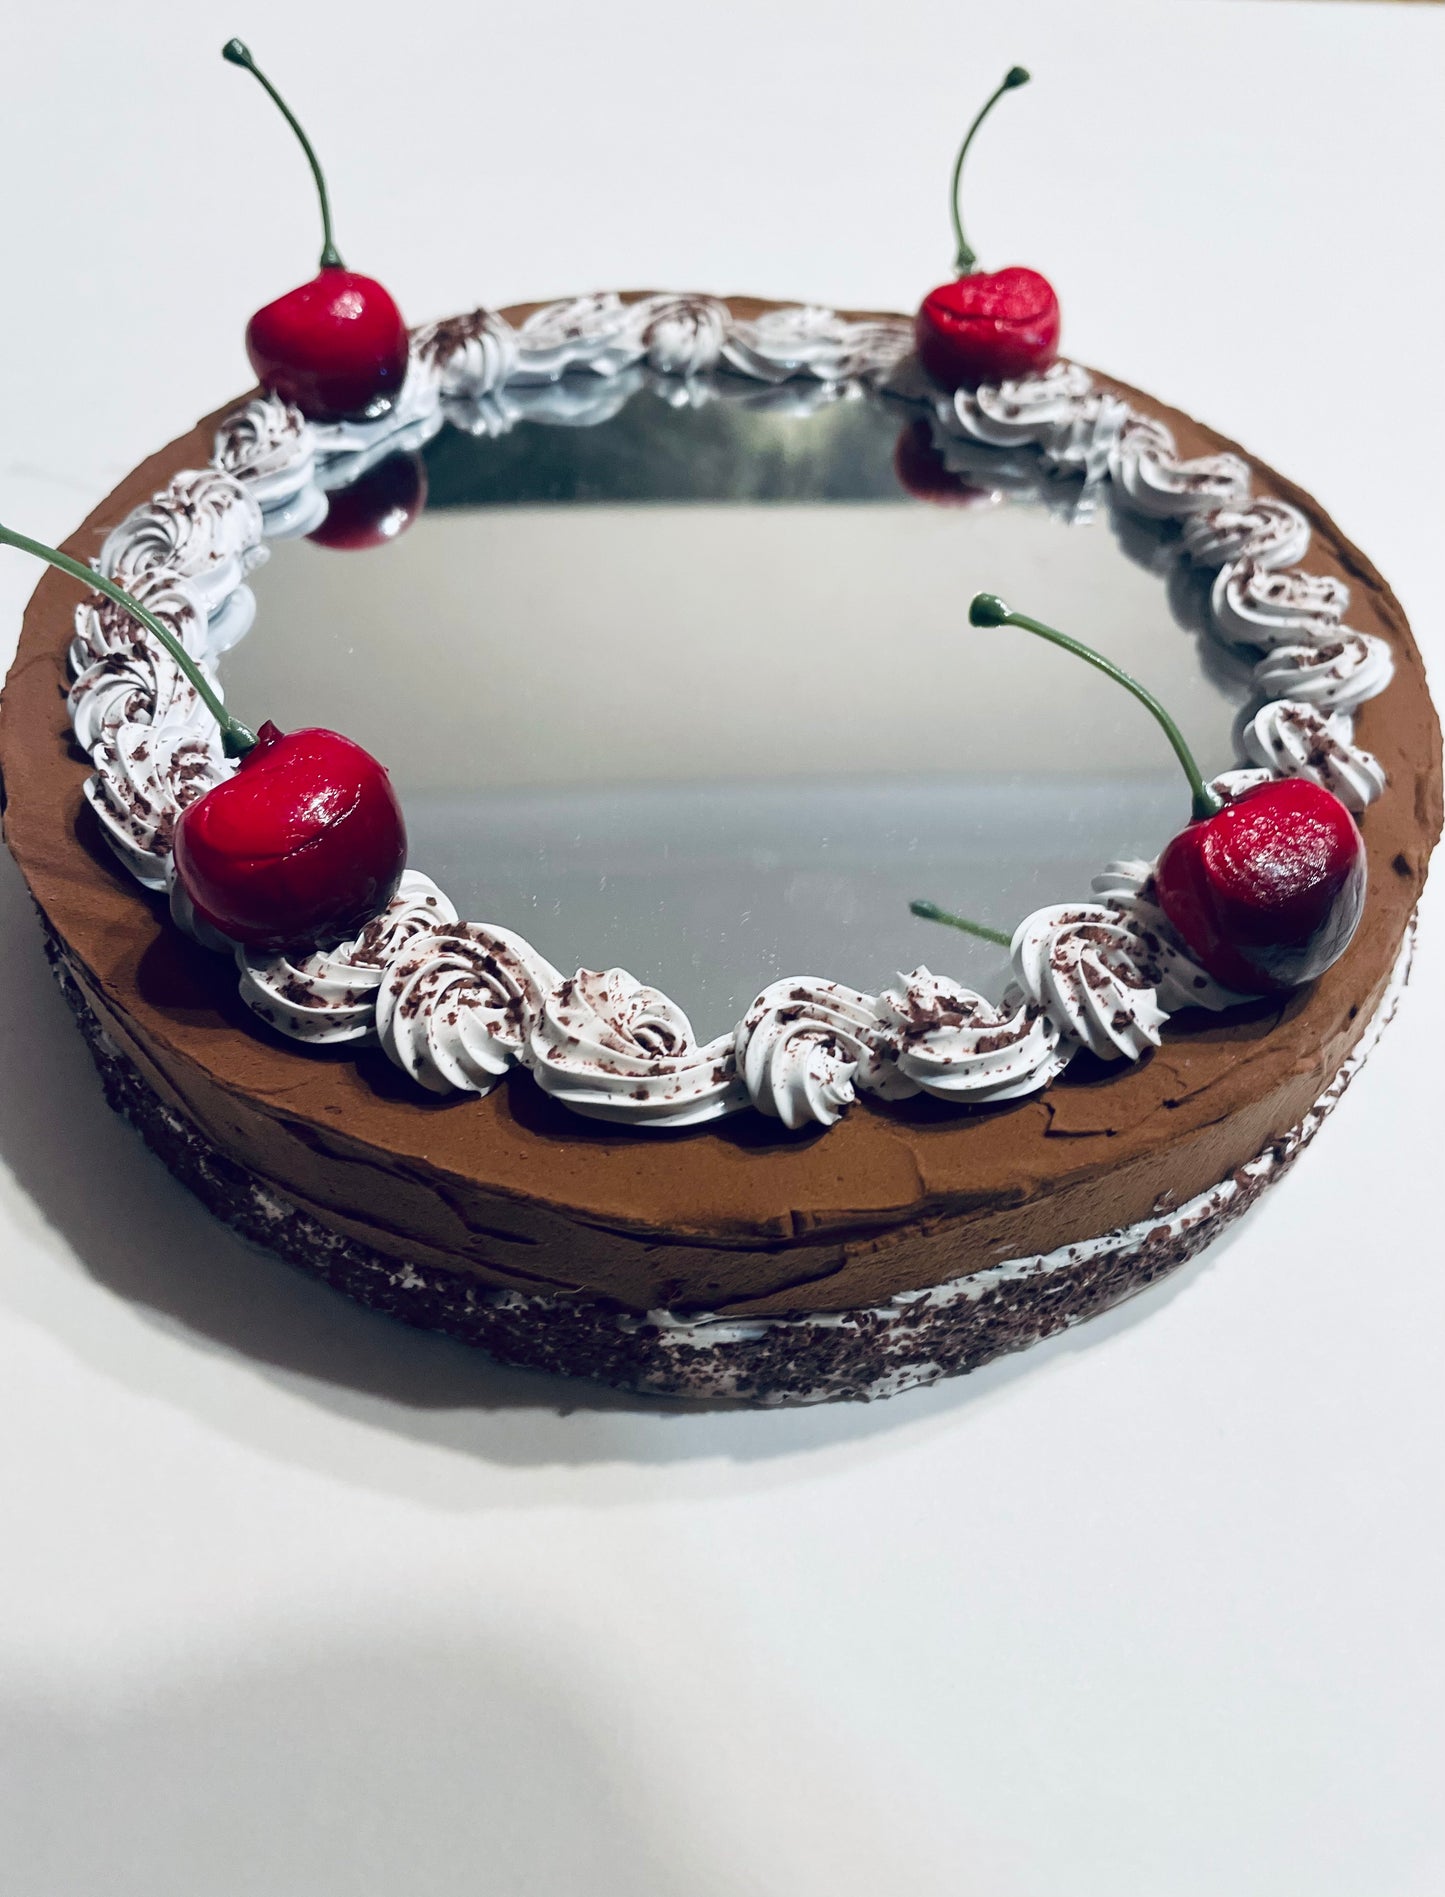 Cake Mirror - Black Forest Gateaux